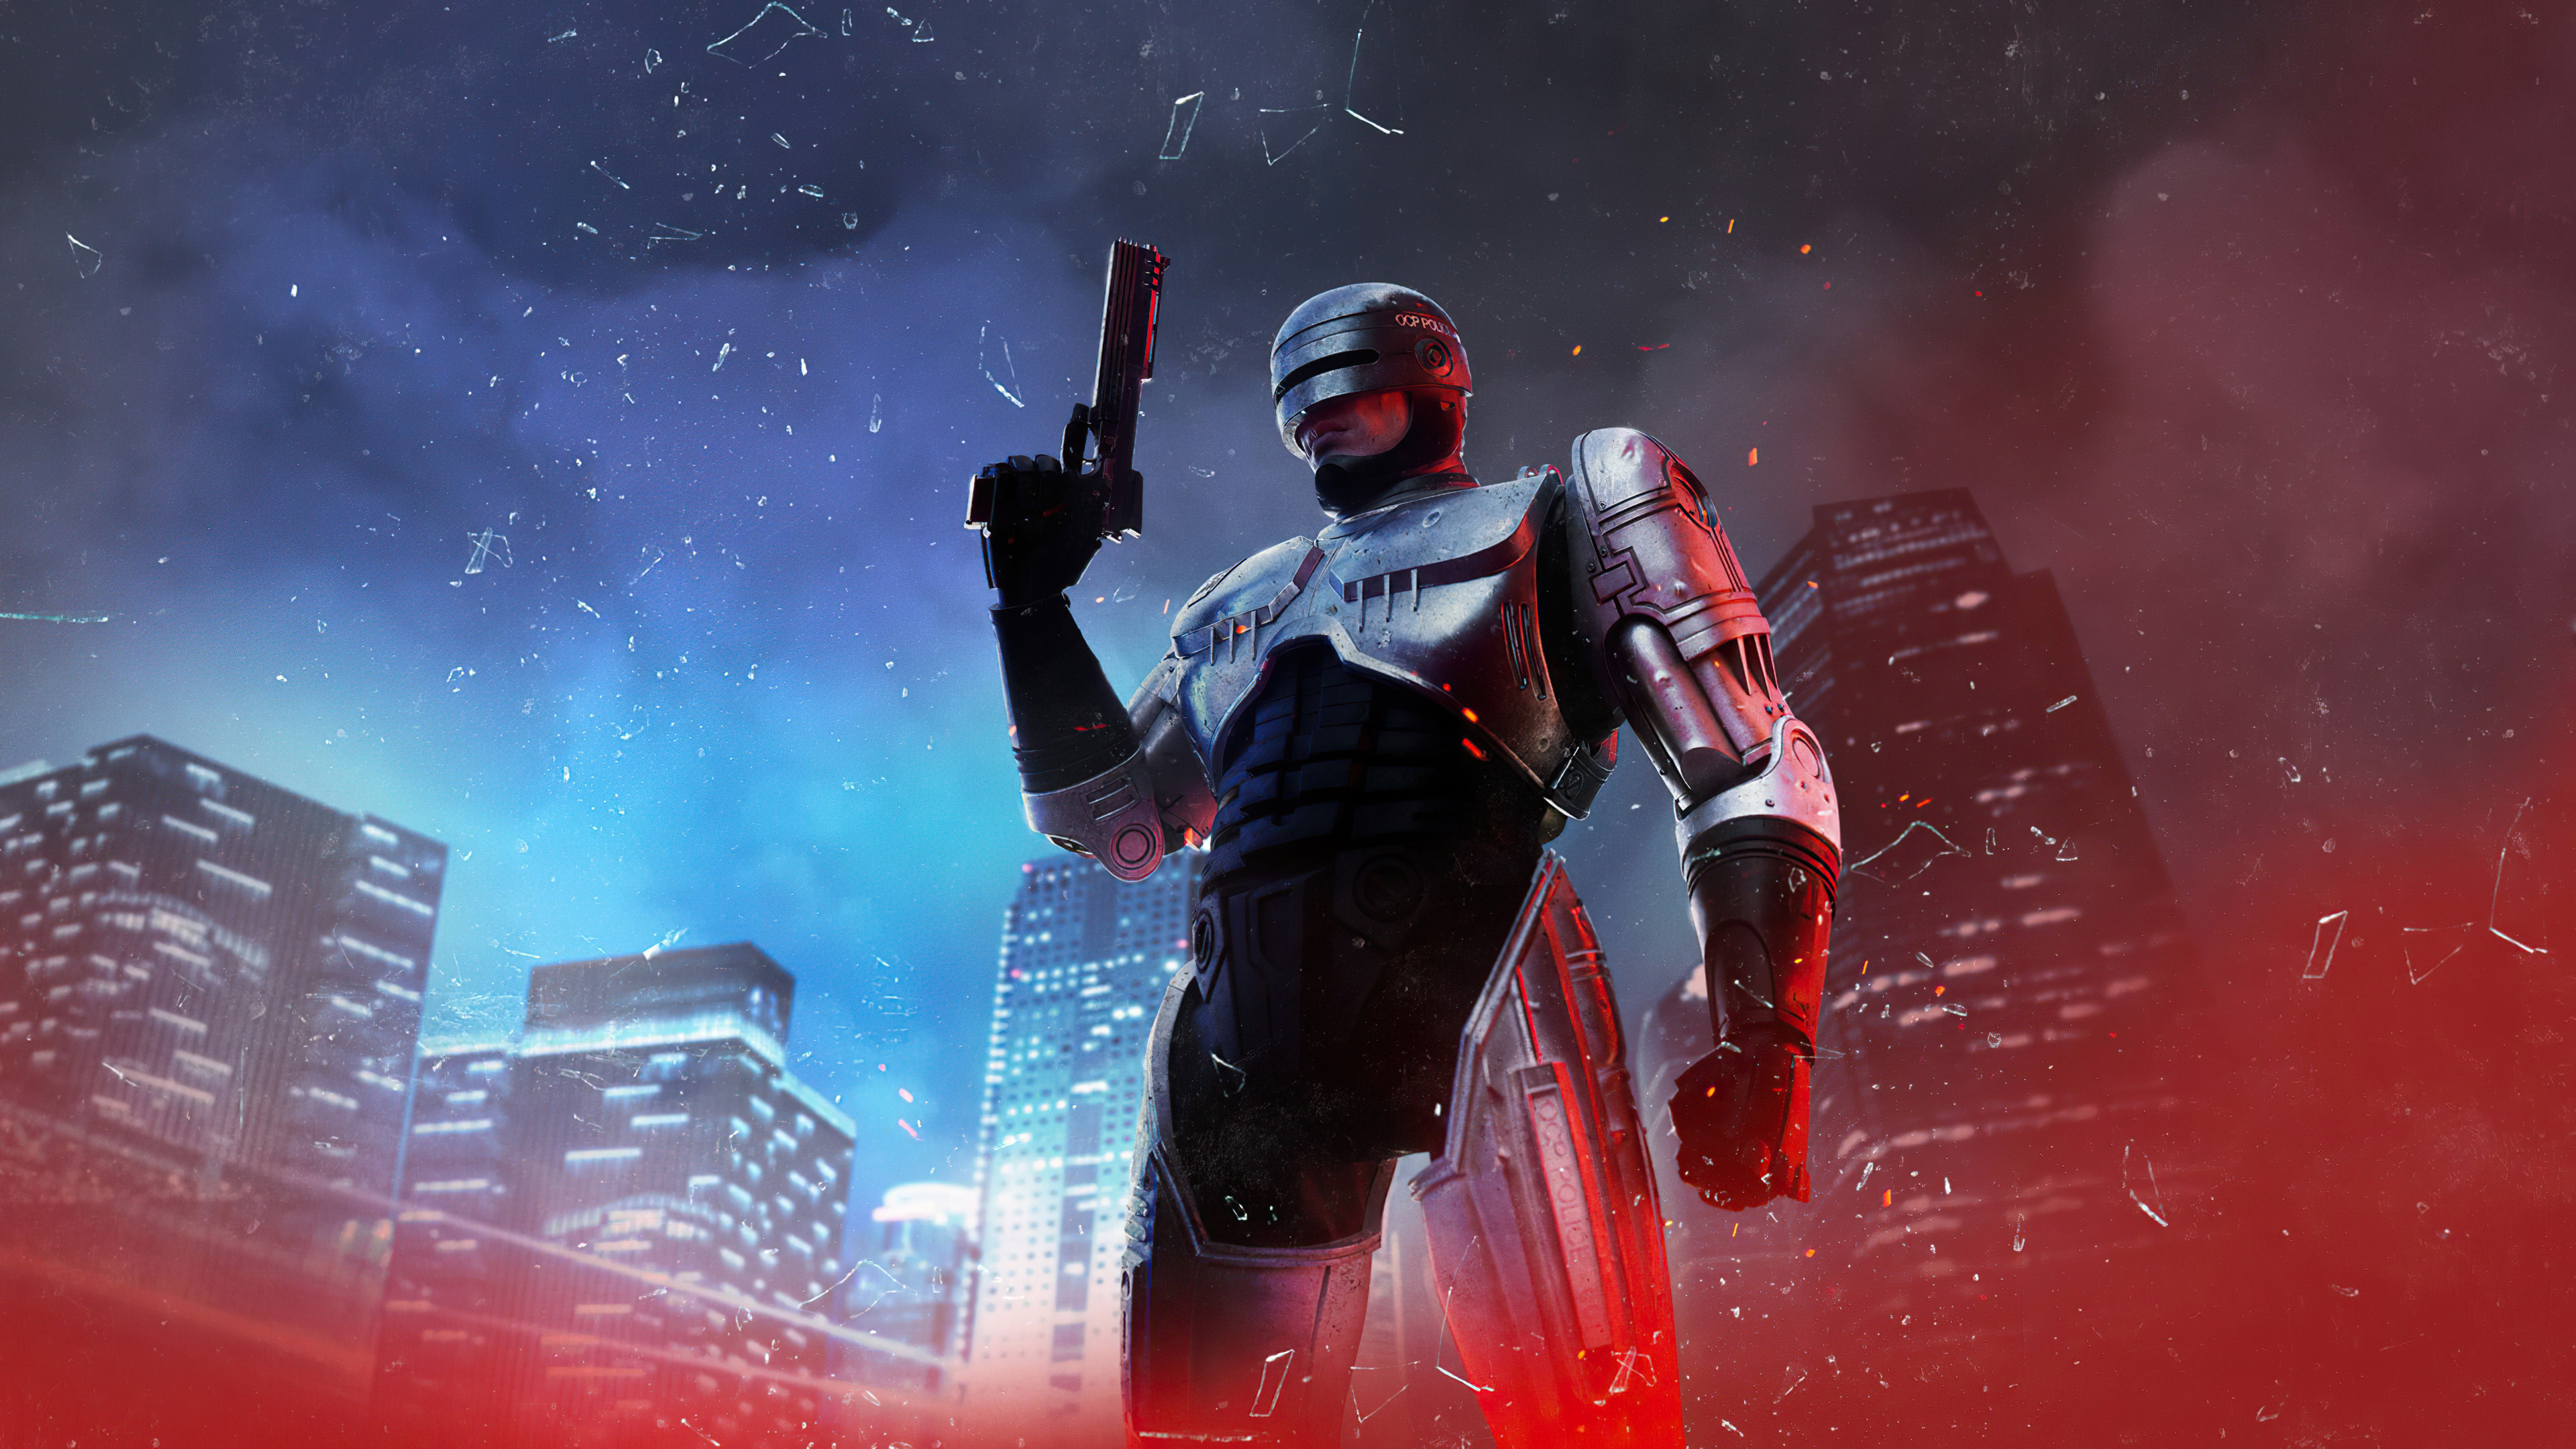 RoboCop Science Fiction Cyborg Artwork Digital Art Video Games 3840x2160